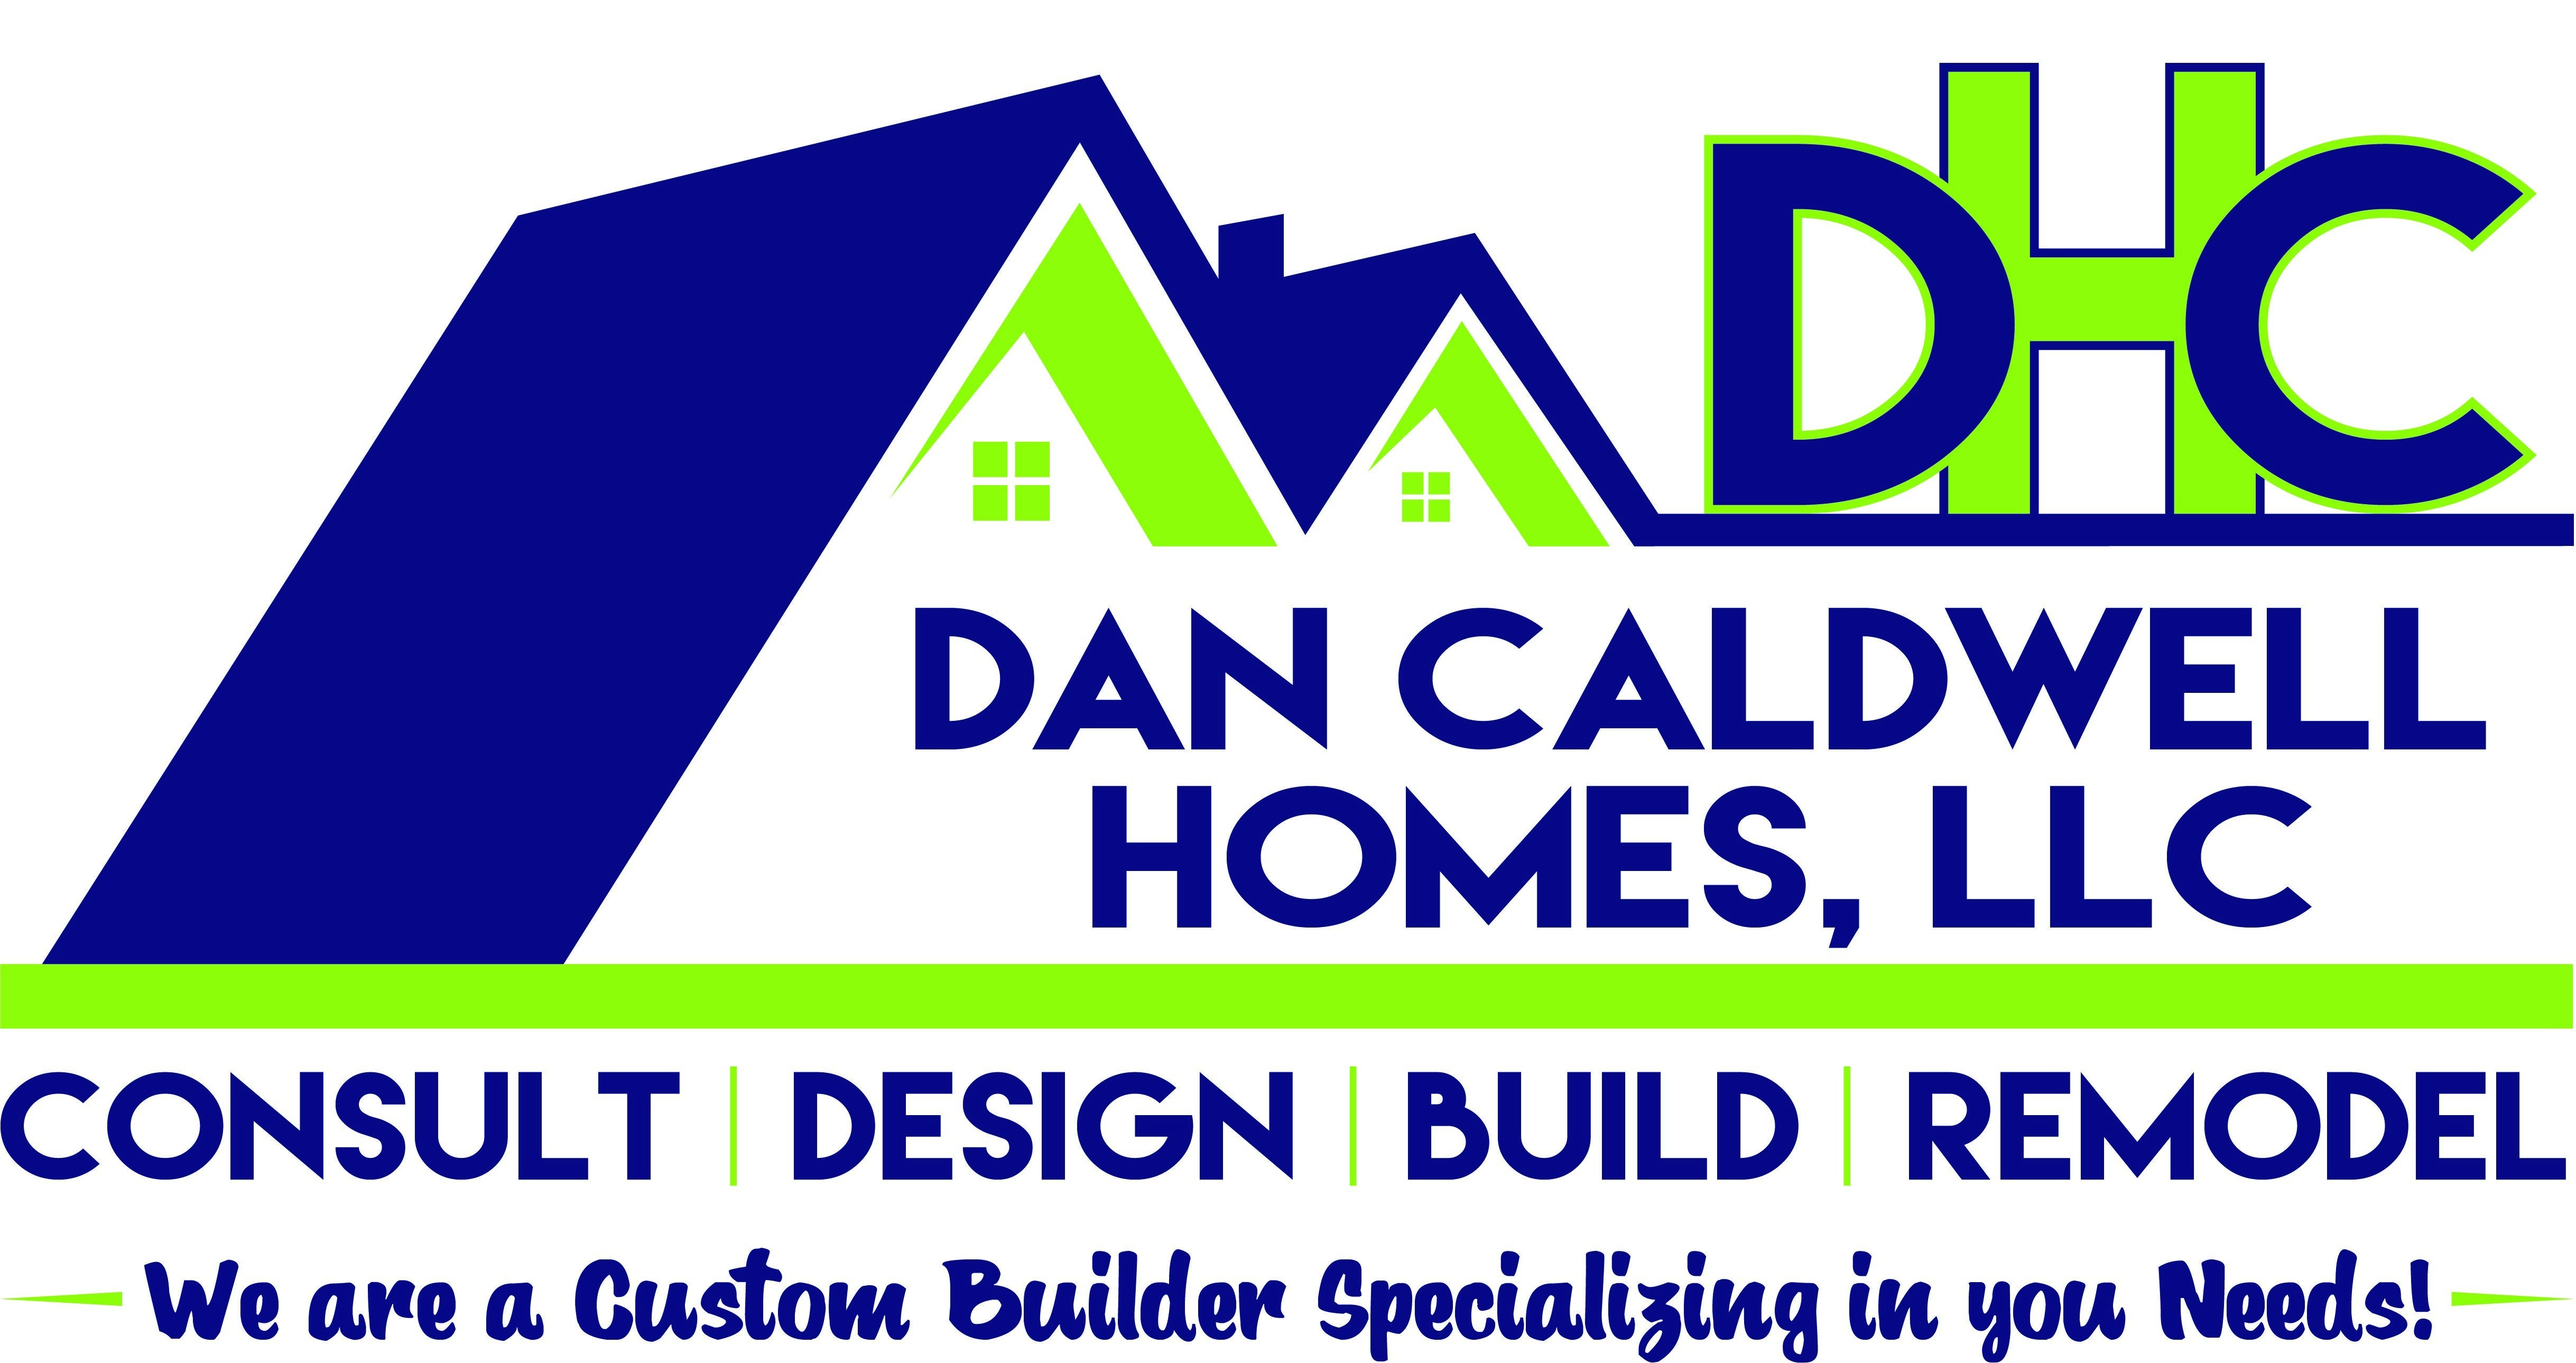 Dan Caldwell Homes, LLC.